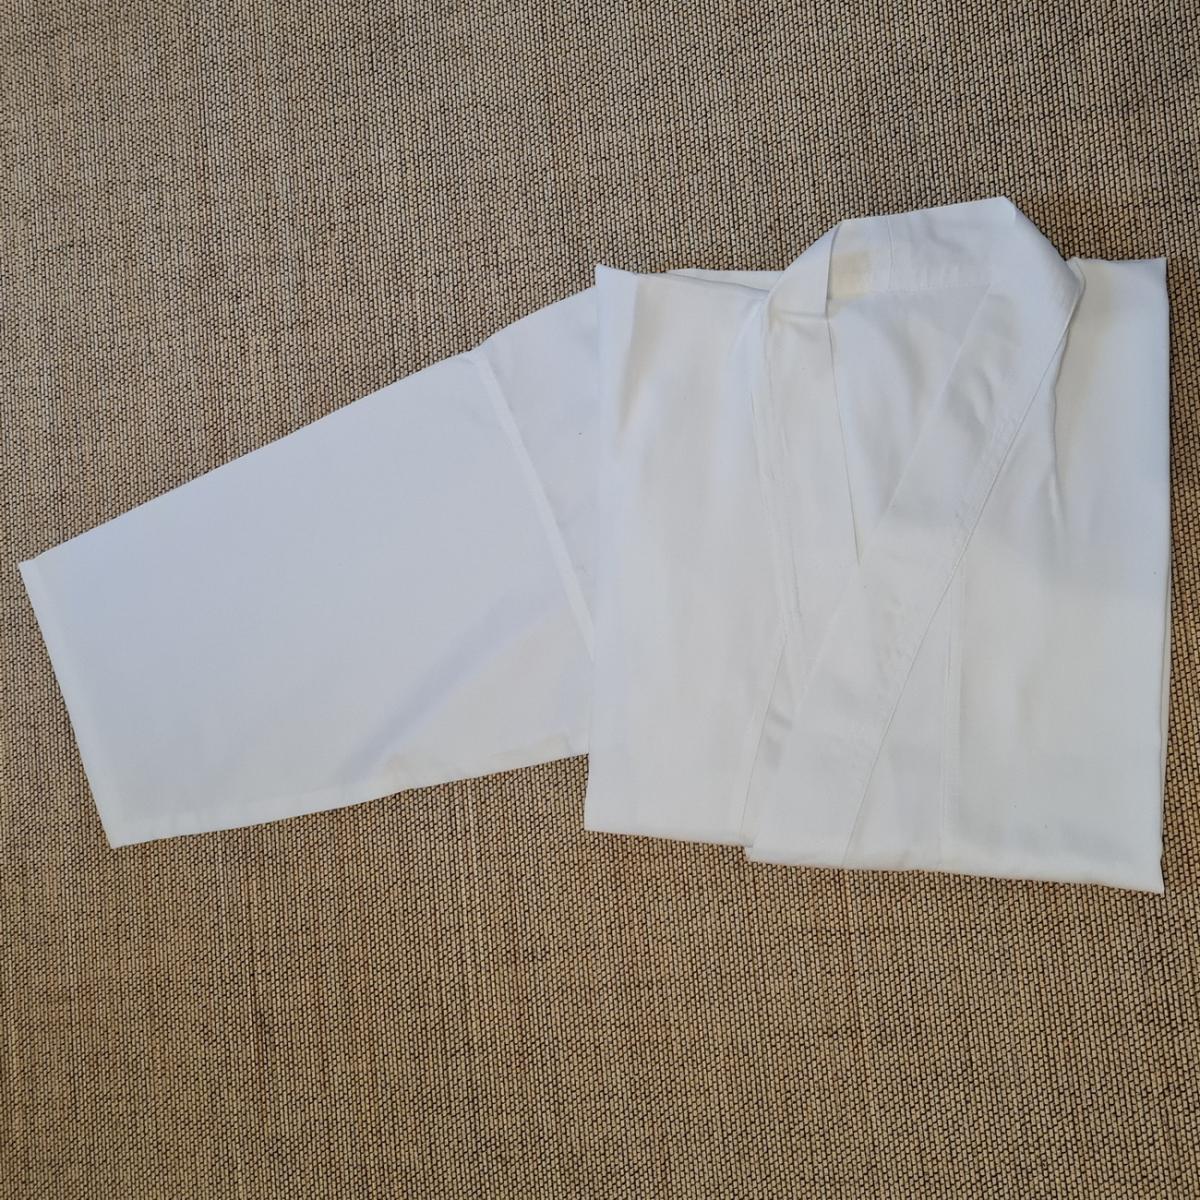 Gi made of cotton - fabric color white - size 160 cm ➤ www.bokken-shop.de. Gi suitable for Iaido, Aikdo, Kendo, Jodo. Your Budo dealer!